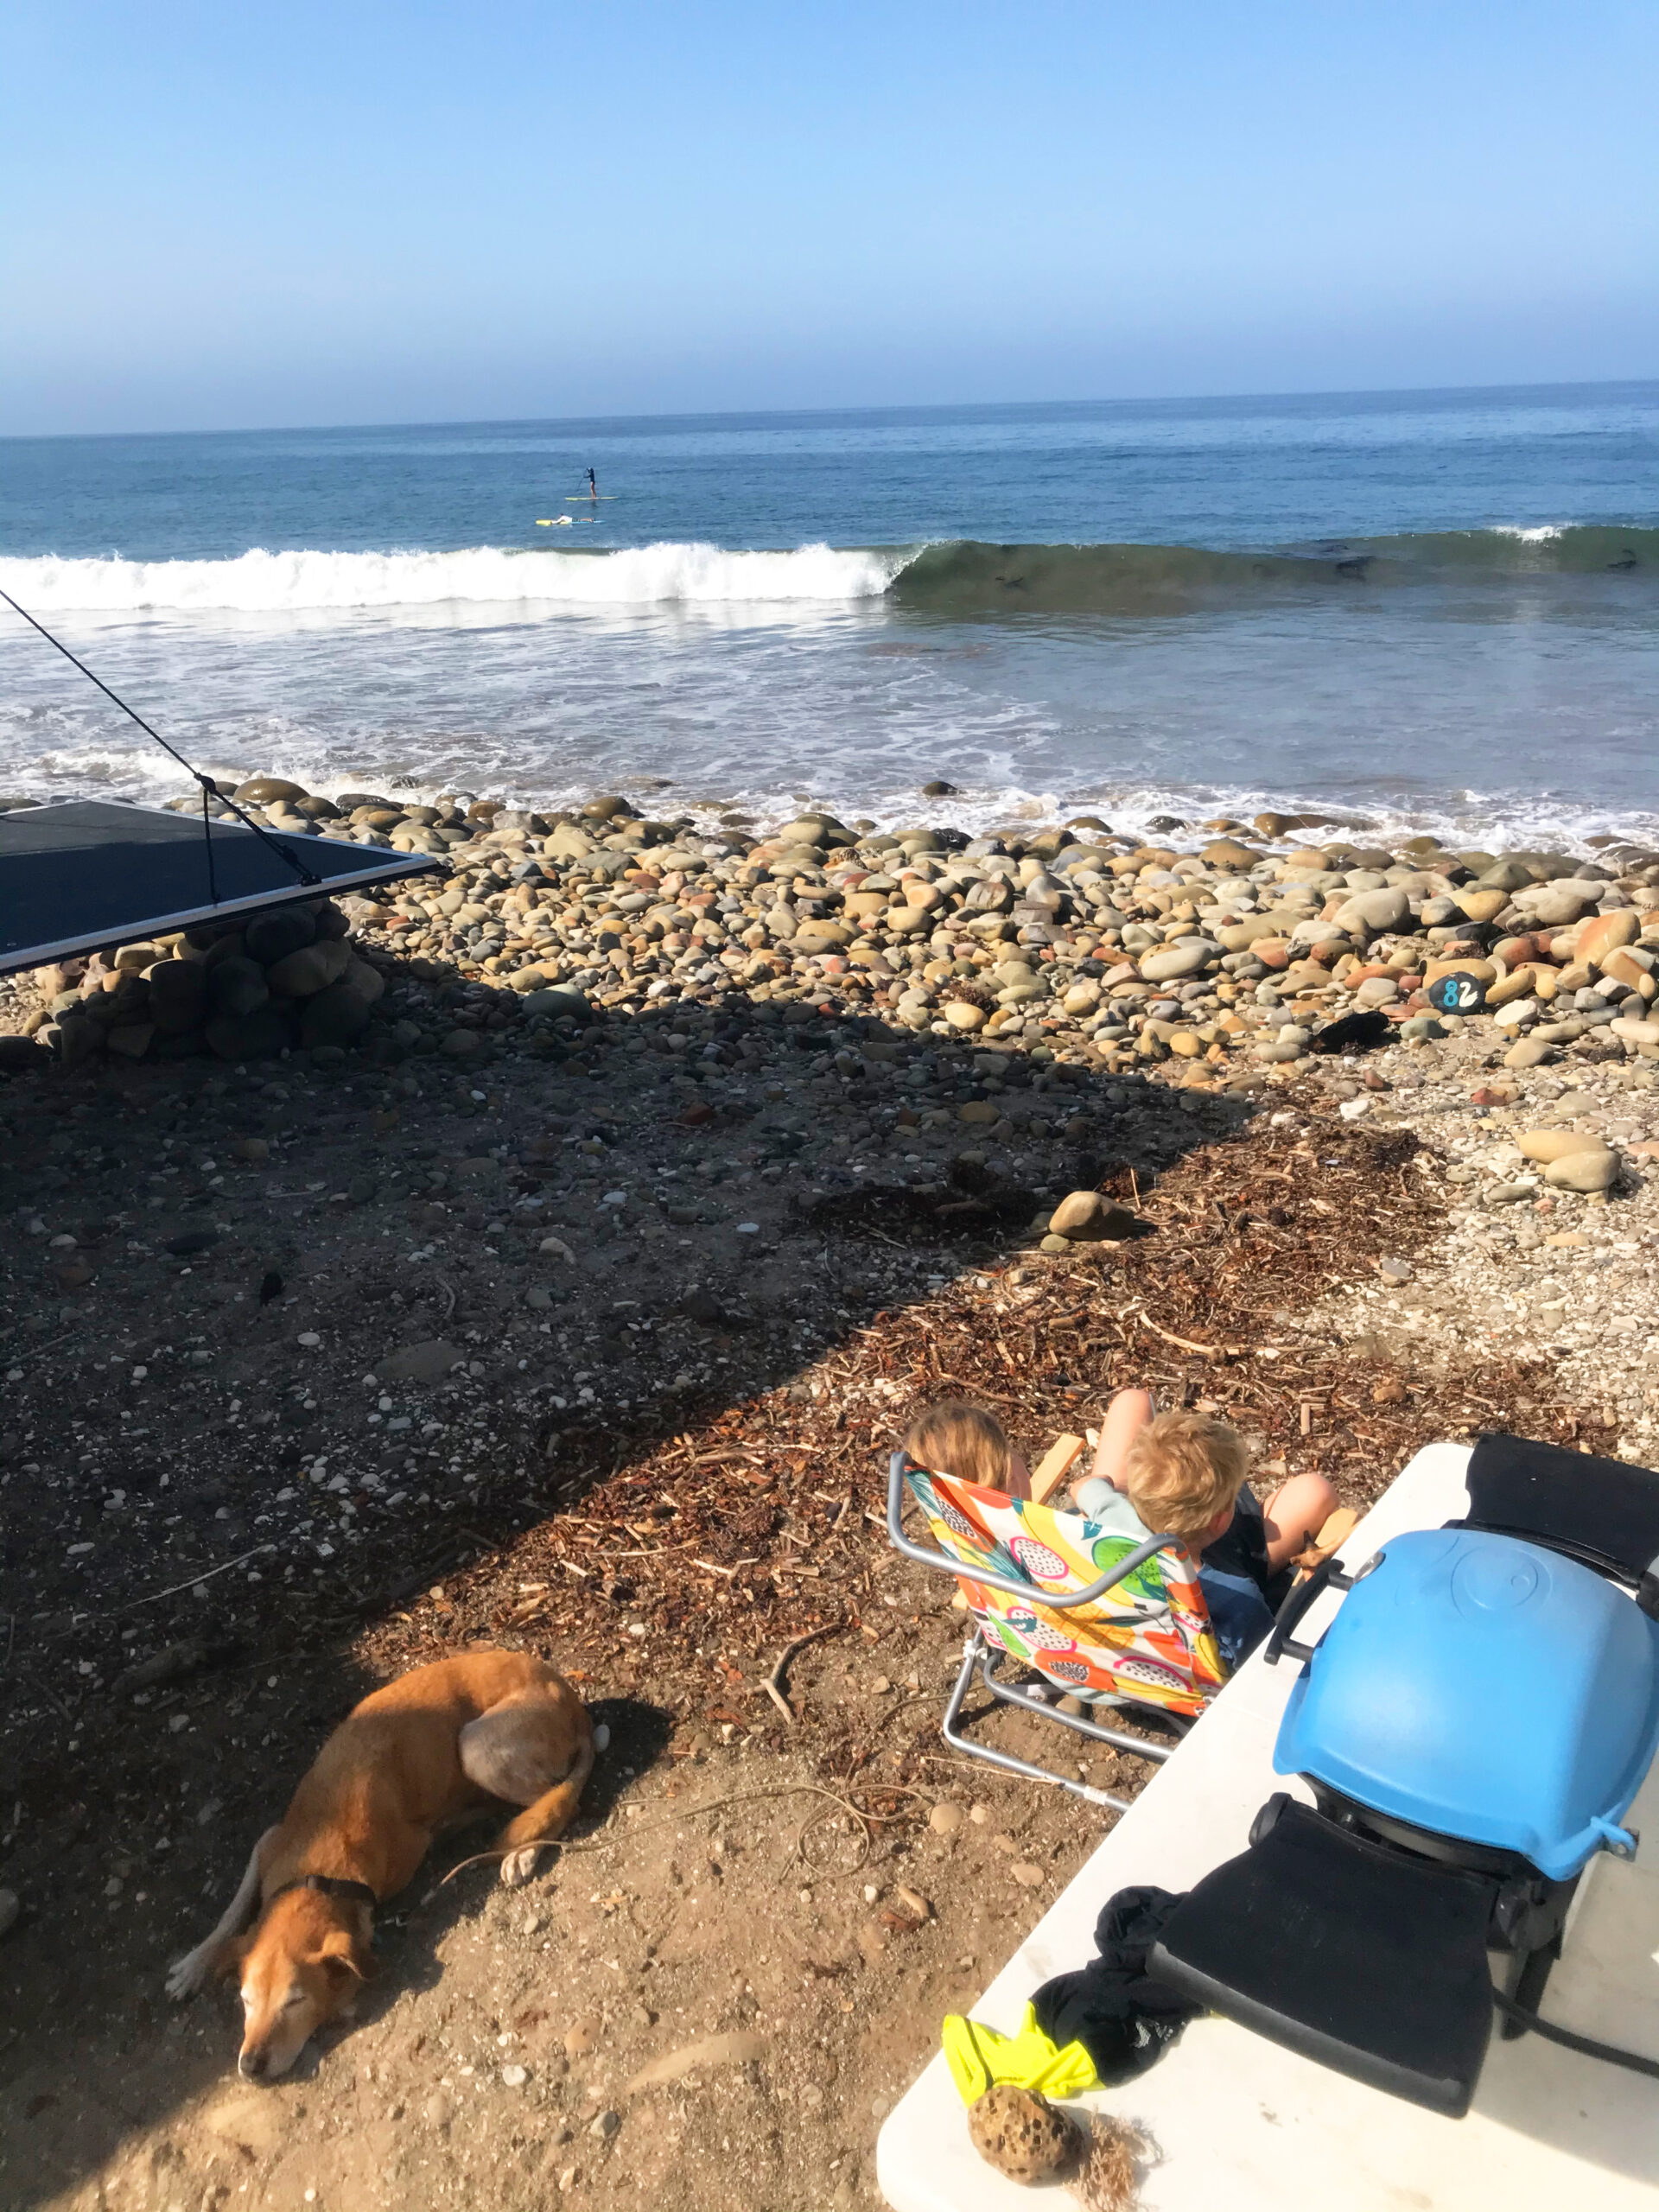 Camping at the beach in Ventura